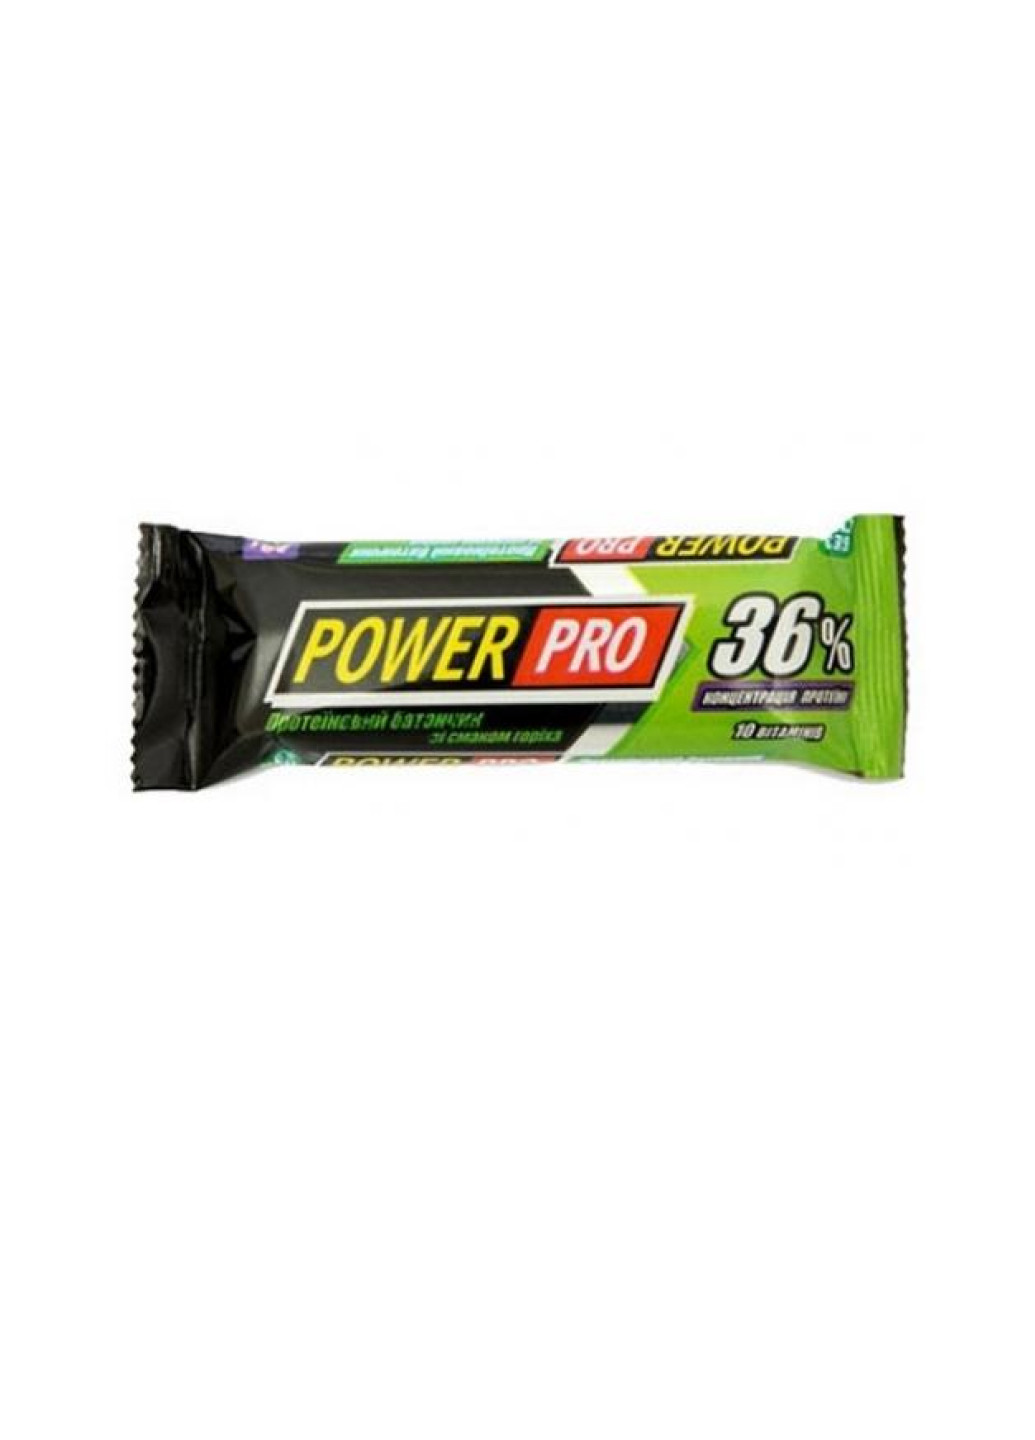 Дієтичне харчування для енергії Protein Bar 36% 20x60g Mochachino Power Pro (251857849)